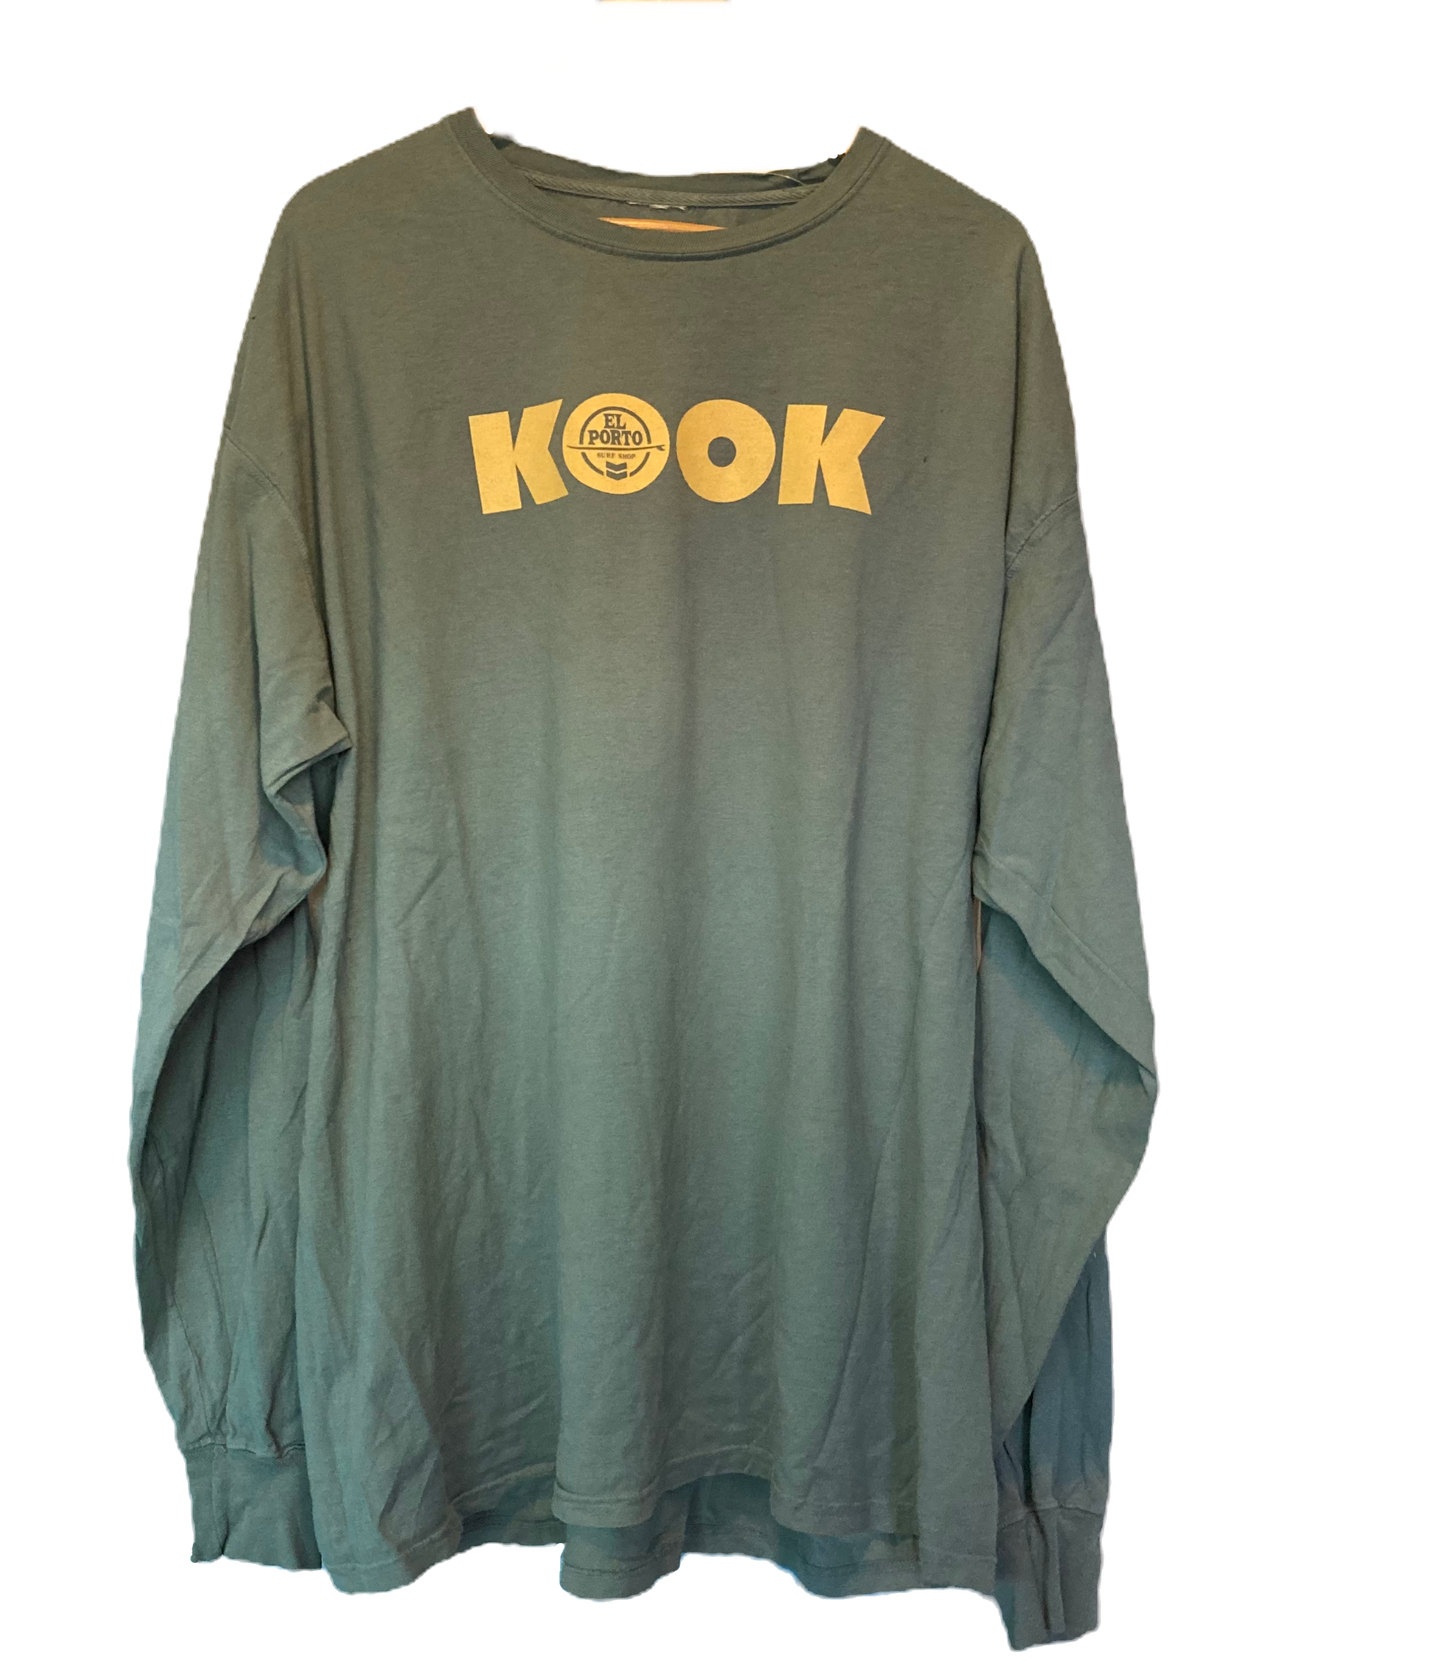 El Porto Surf Shop “Kook” Green Long Sleeve